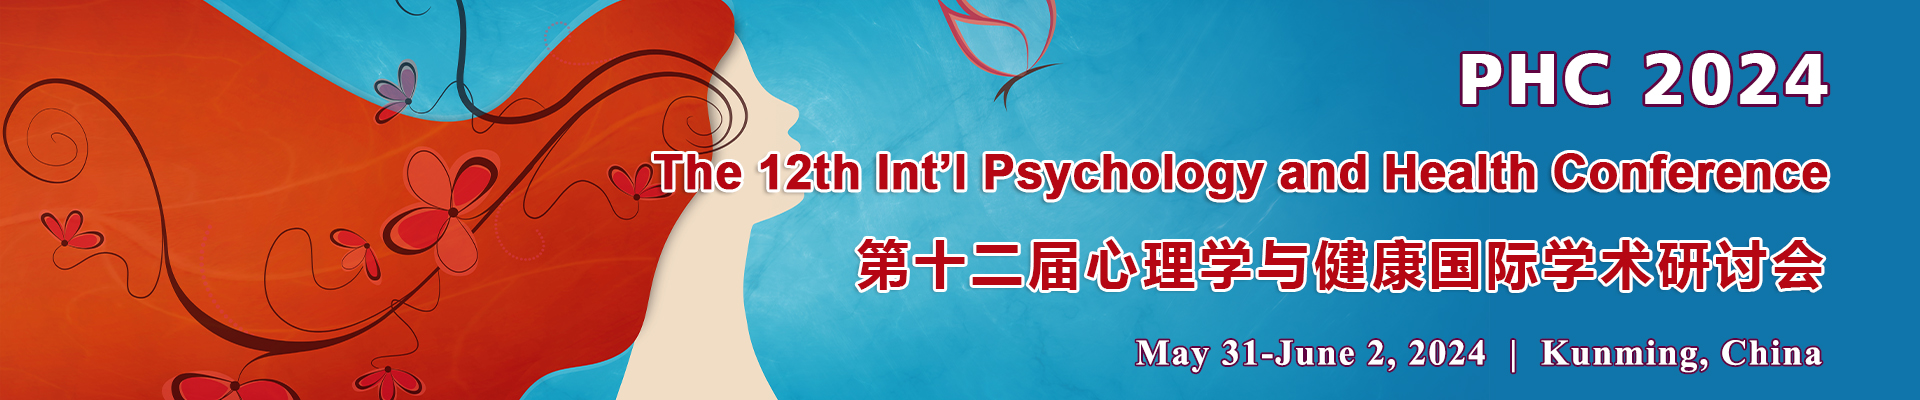 The 12th Int’l Psychology and Health Conference (PHC 2024), Kunming, Yunnan, China